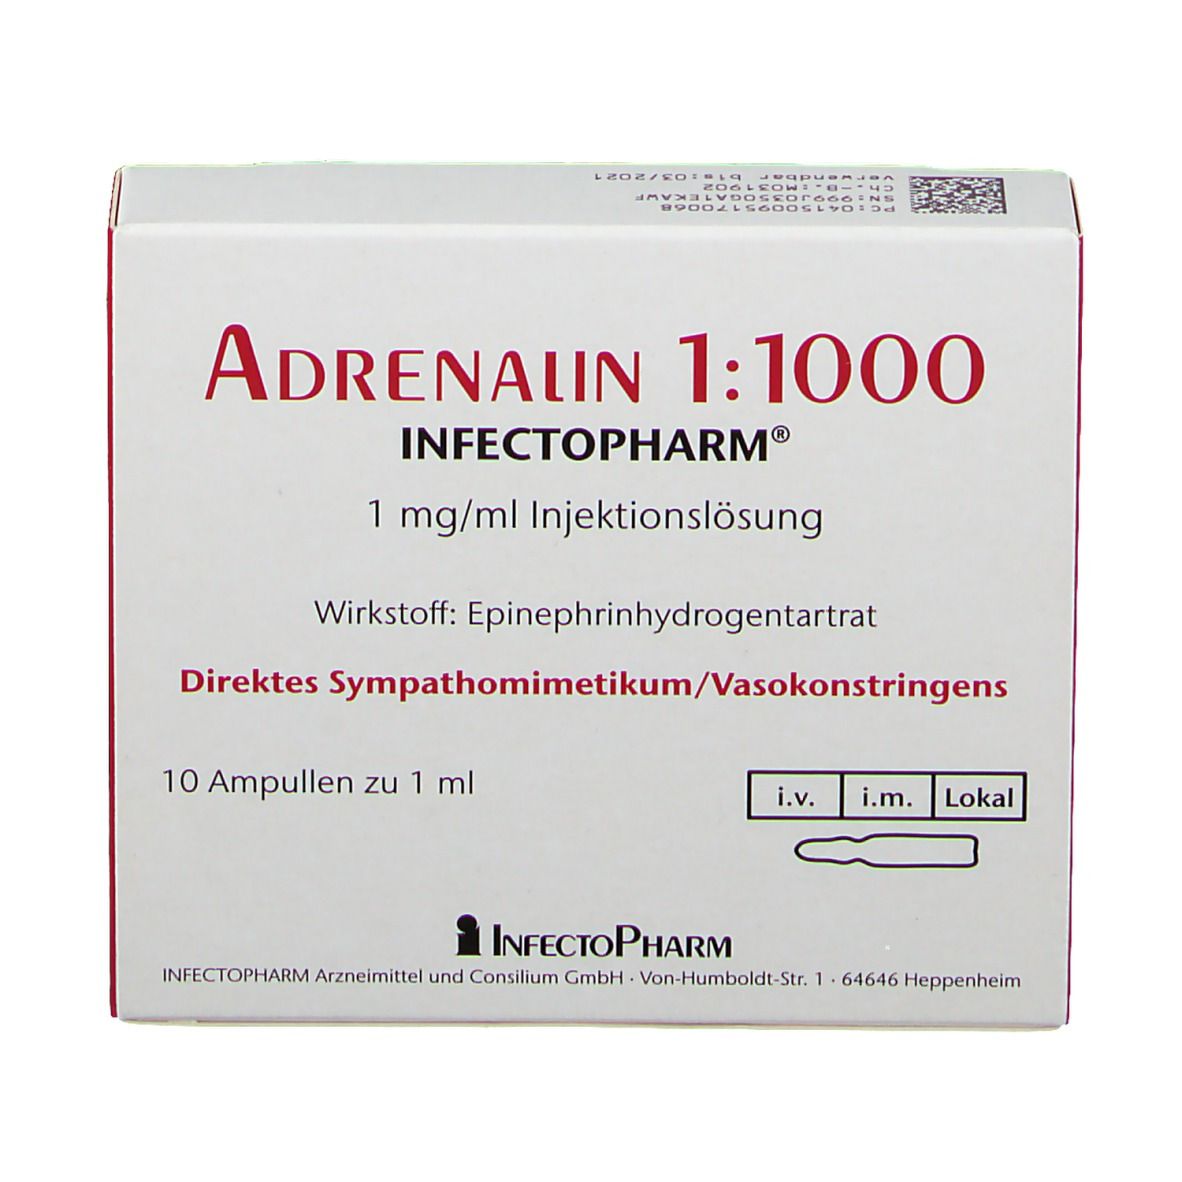 Adrenalin 1:1000 InfectoPharm® 1 mg/ml